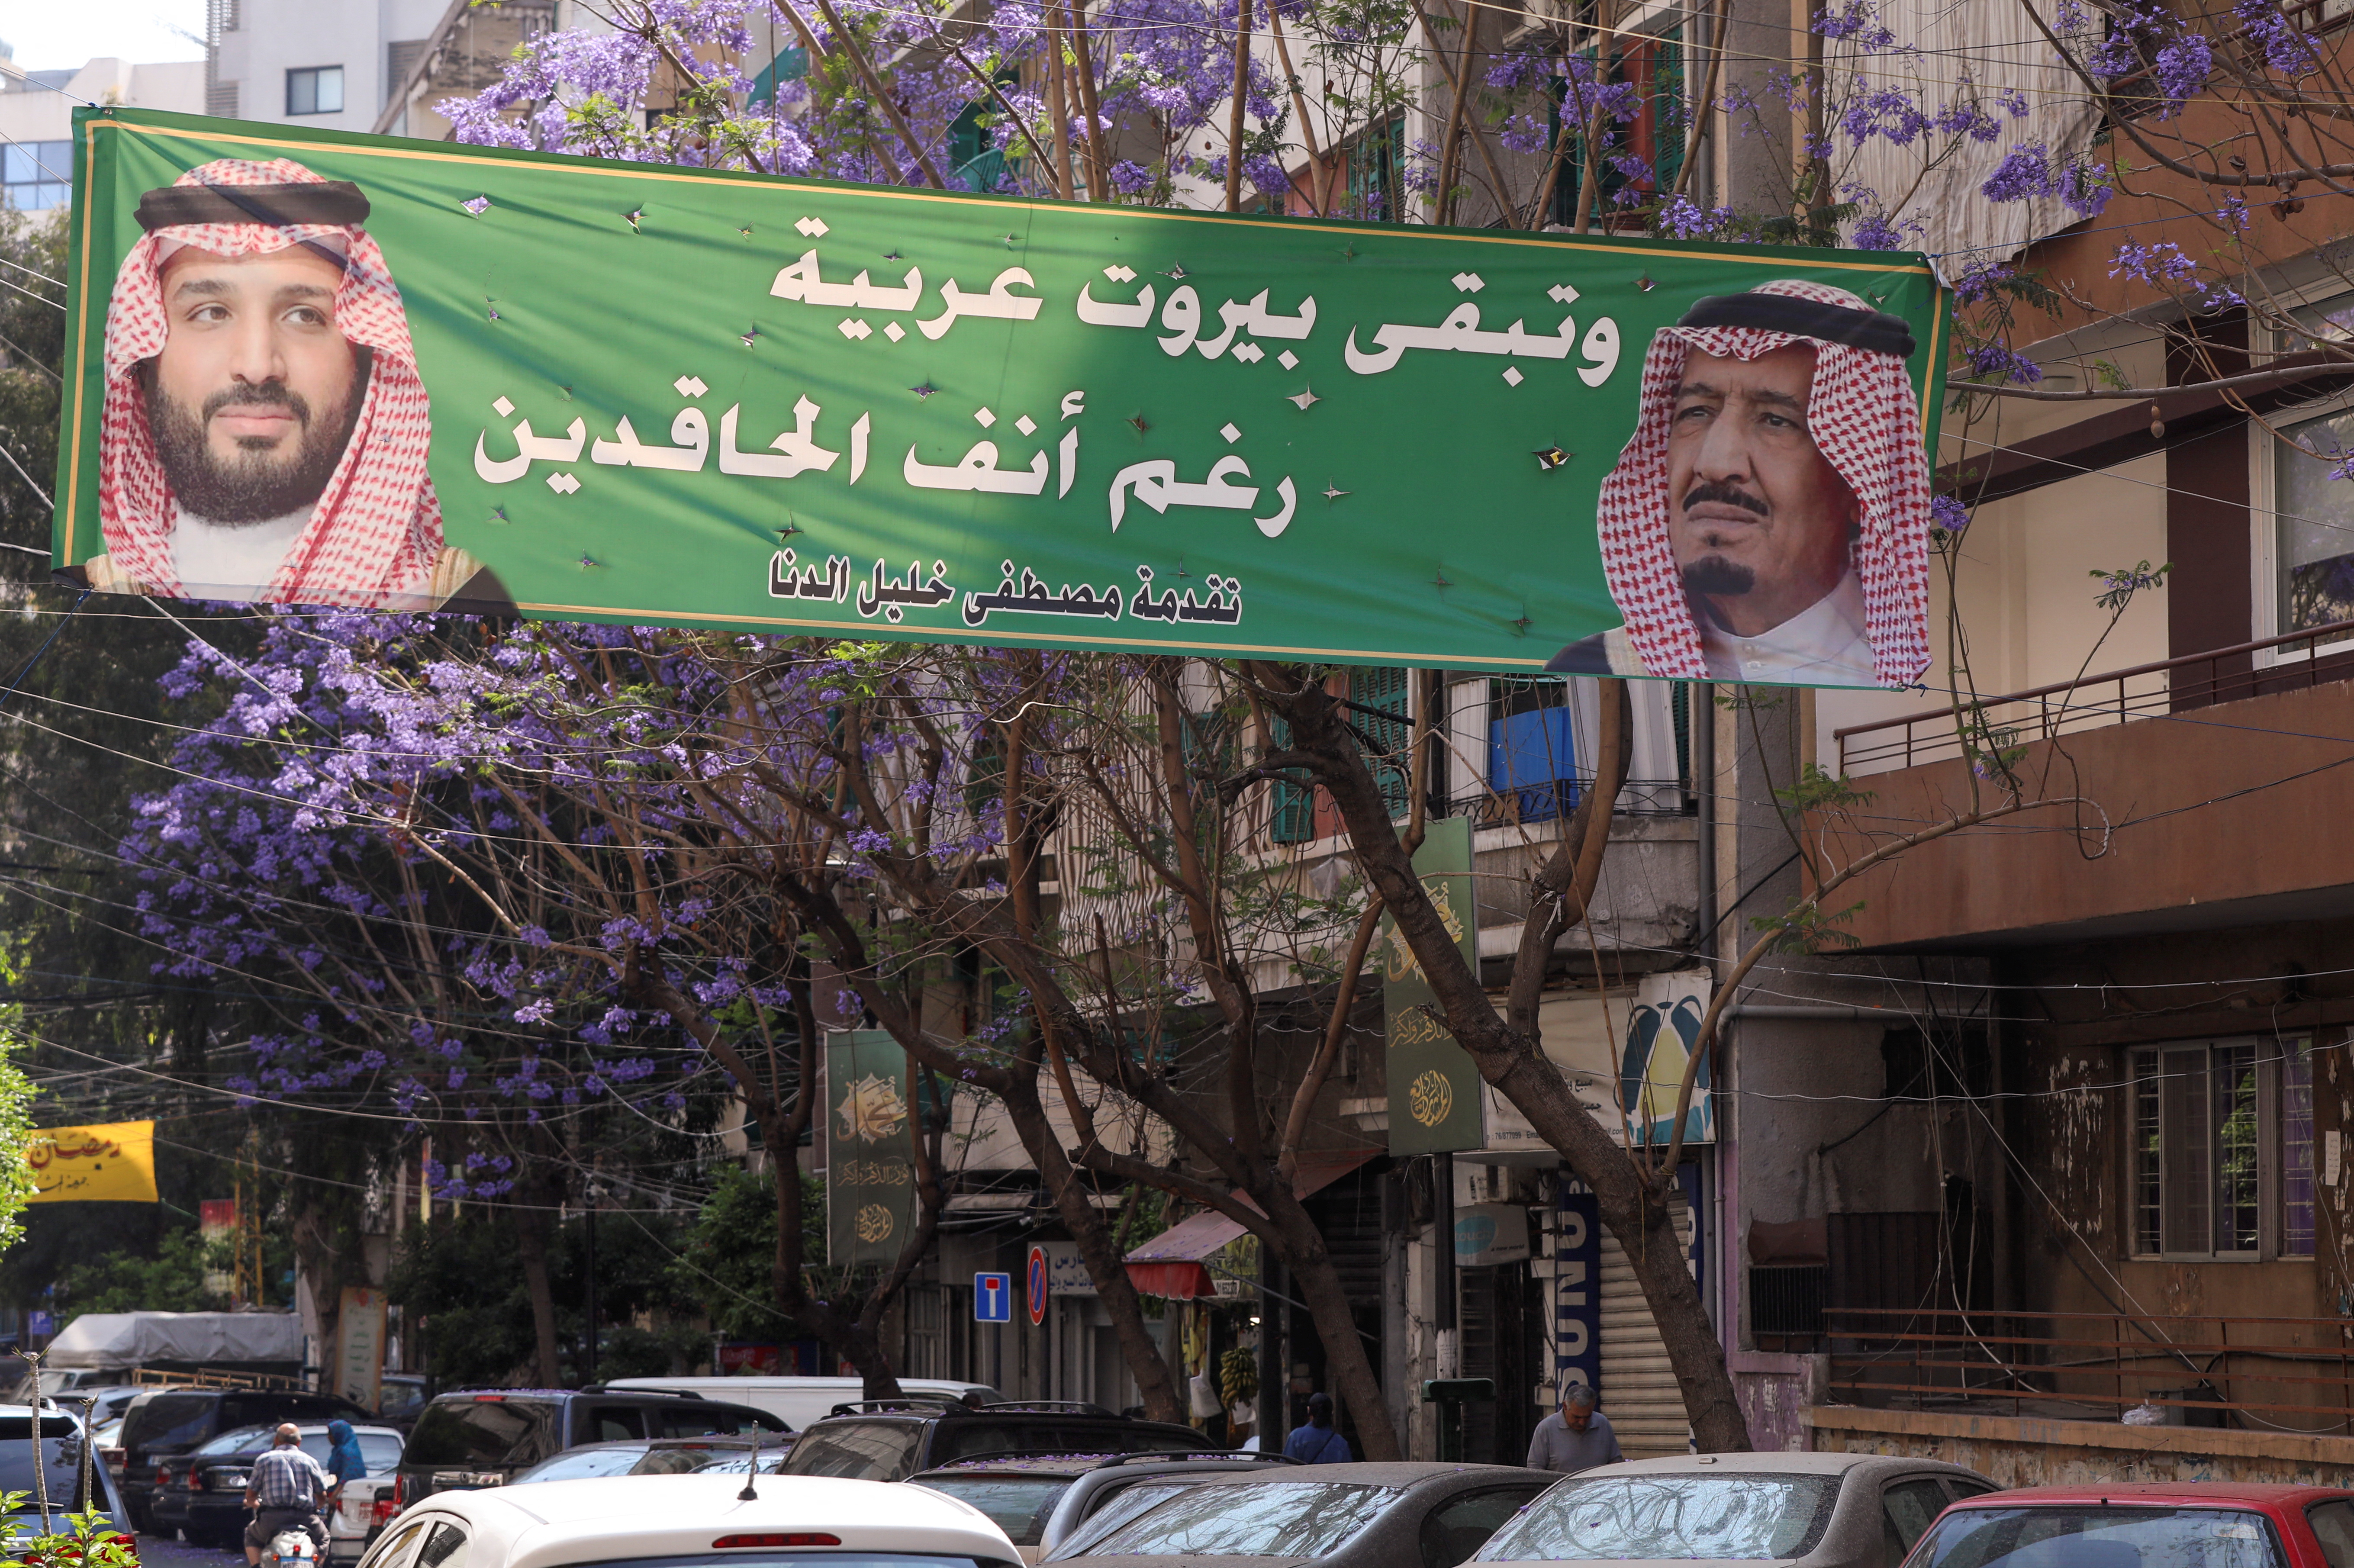 A view shows a banner depicting Saudi Crown Prince Mohammed bin Salman and Saudi King Salman bin Abdulaziz in Beirut